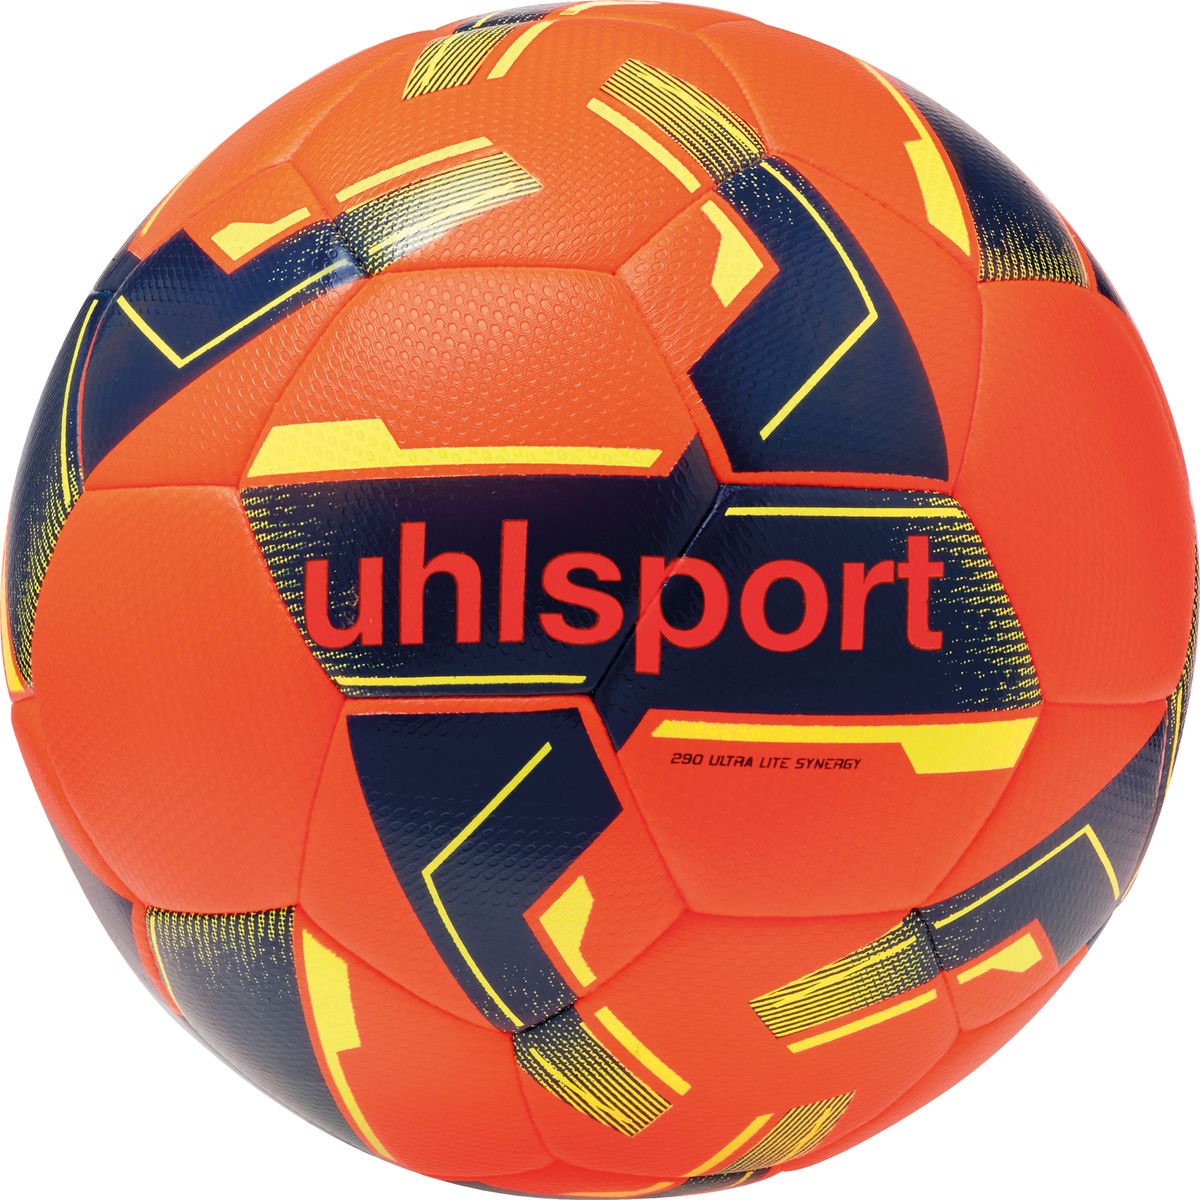 Uhlsport 290 Ultra Lite Synergy Outdoor-Fußball